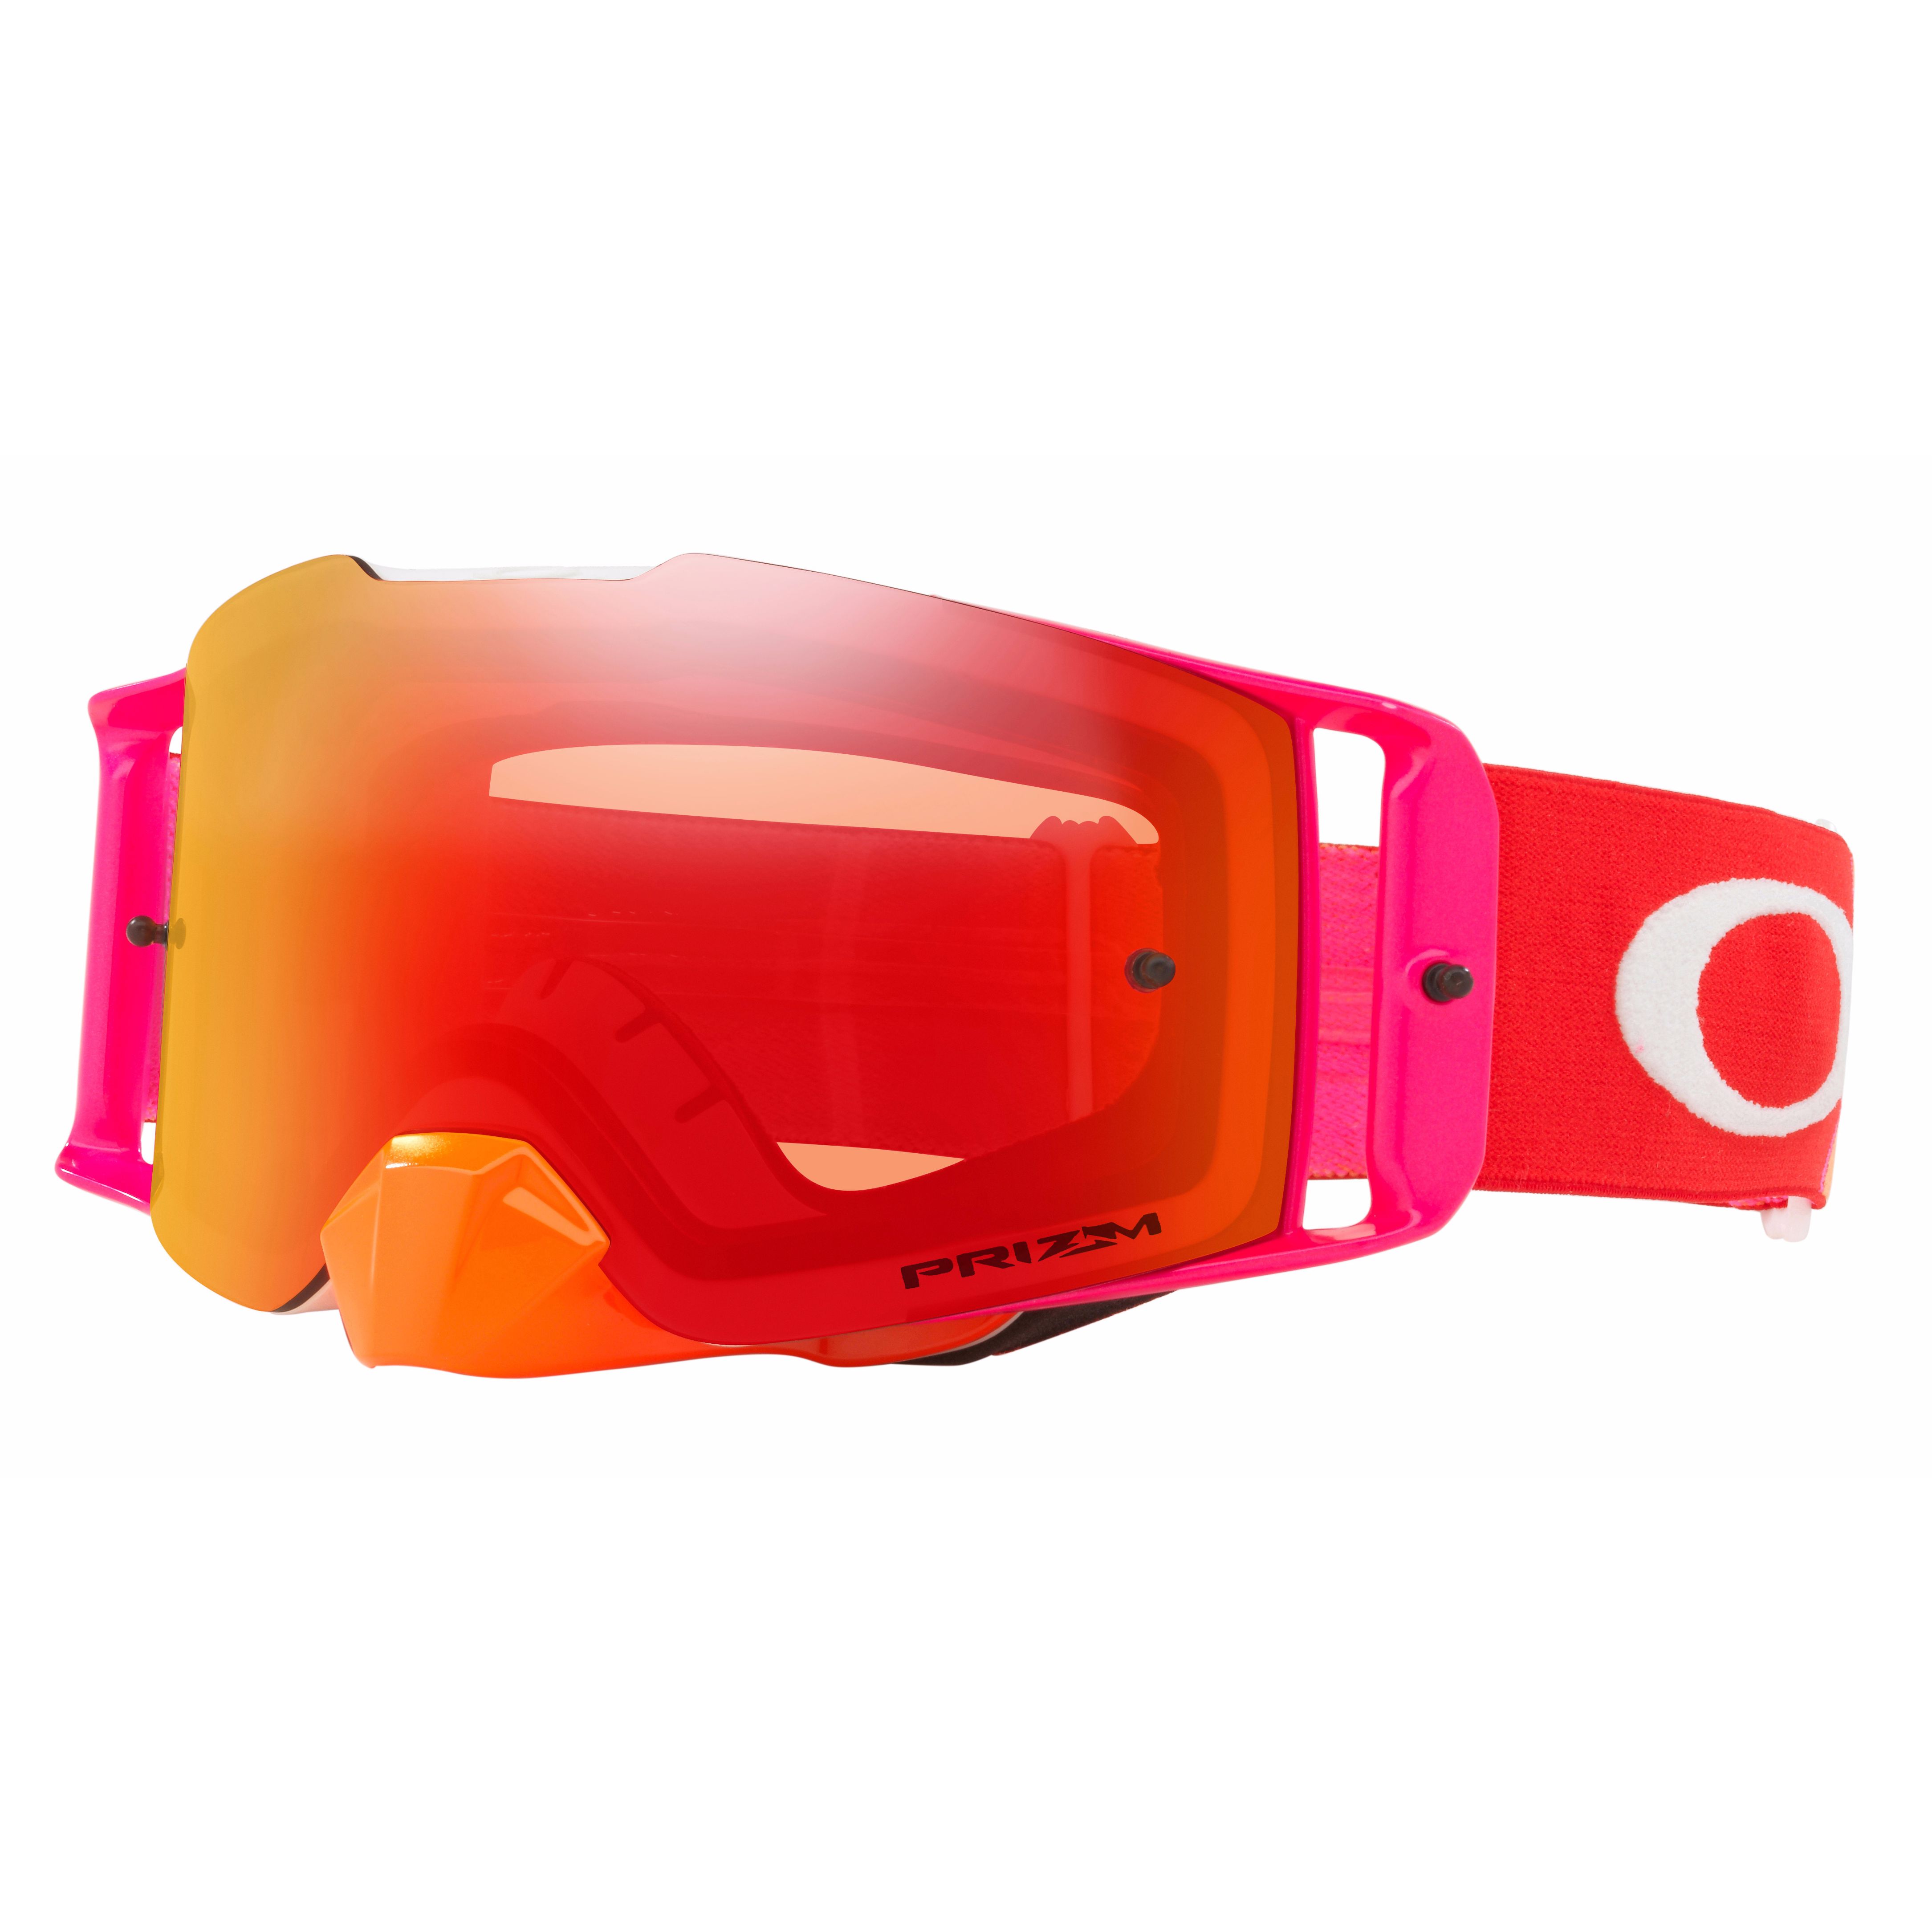 Masque Cross Oakley Front Line Mx - Pinned Race Orange Rouge écran Prizm Iridium